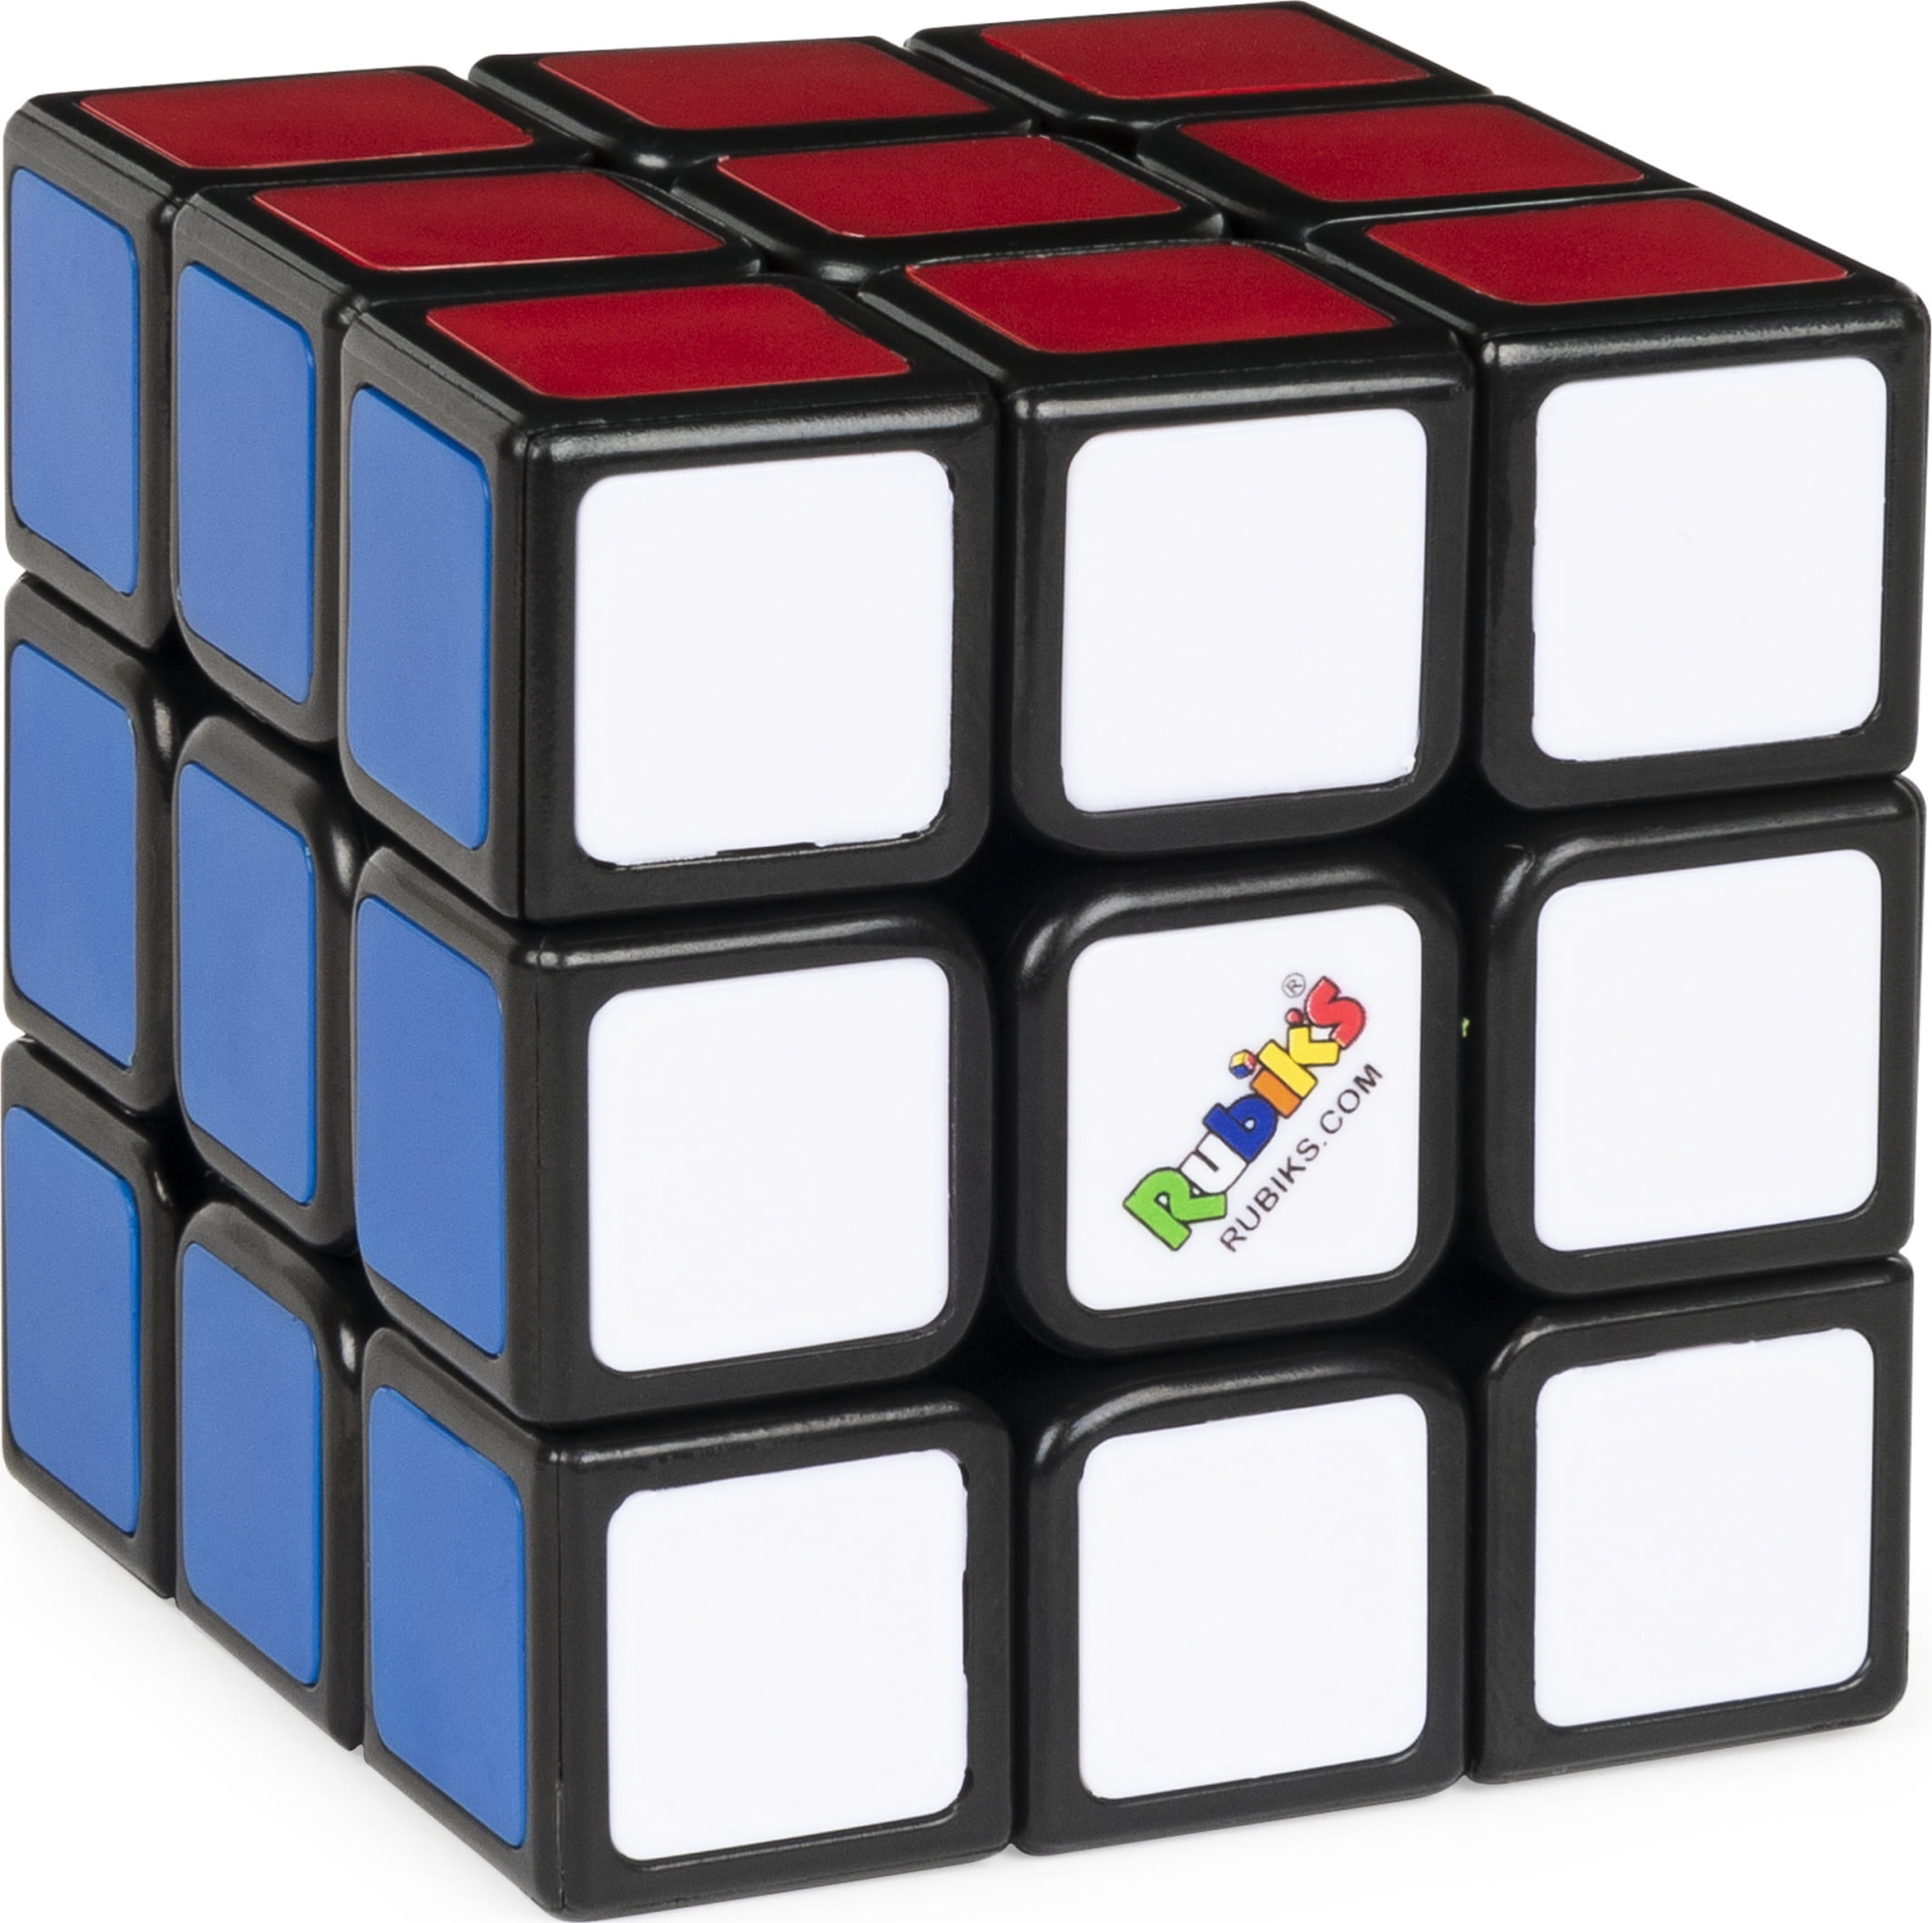 ORIGINAL Rubiks Cube 3x3 new rubics rubix puzzle brain tease Hasbro Classic